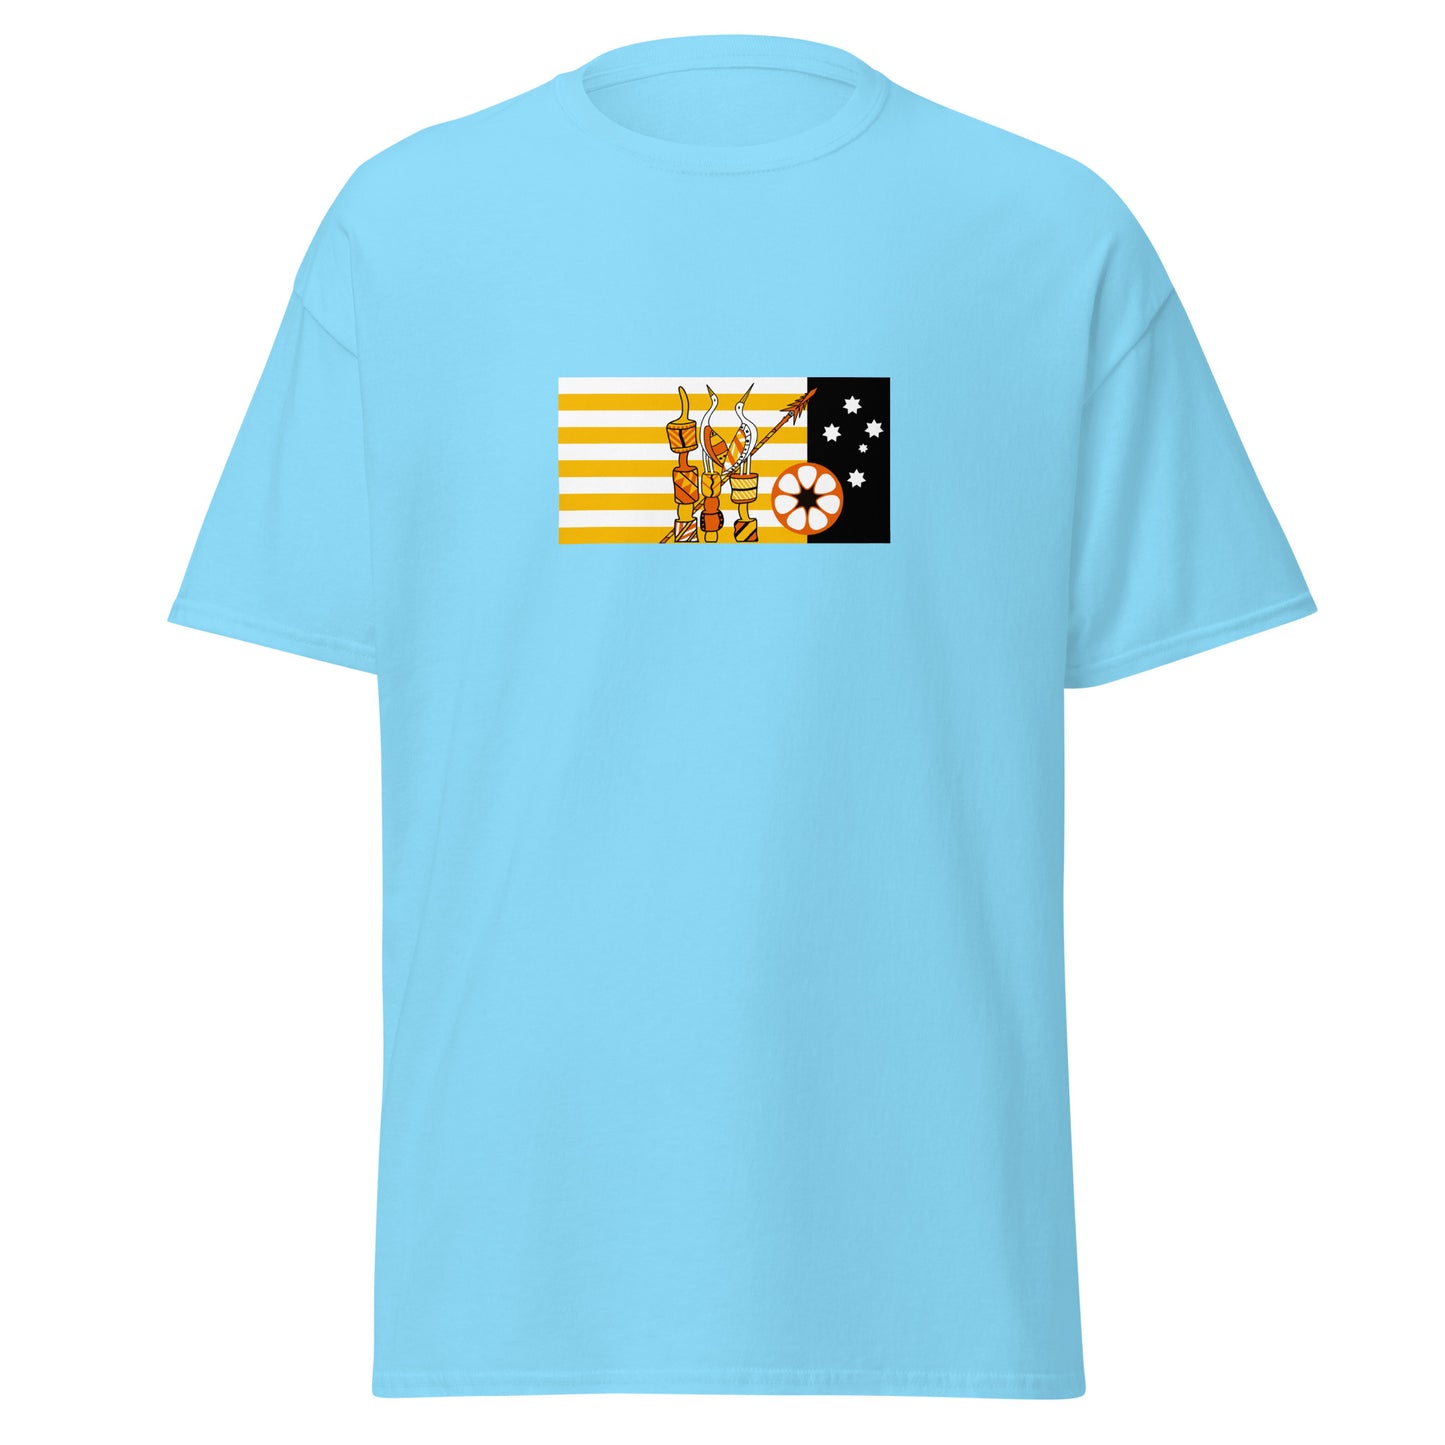 Australia - Tiwi people | Aboriginal Australian Flag Interactive T-shirt